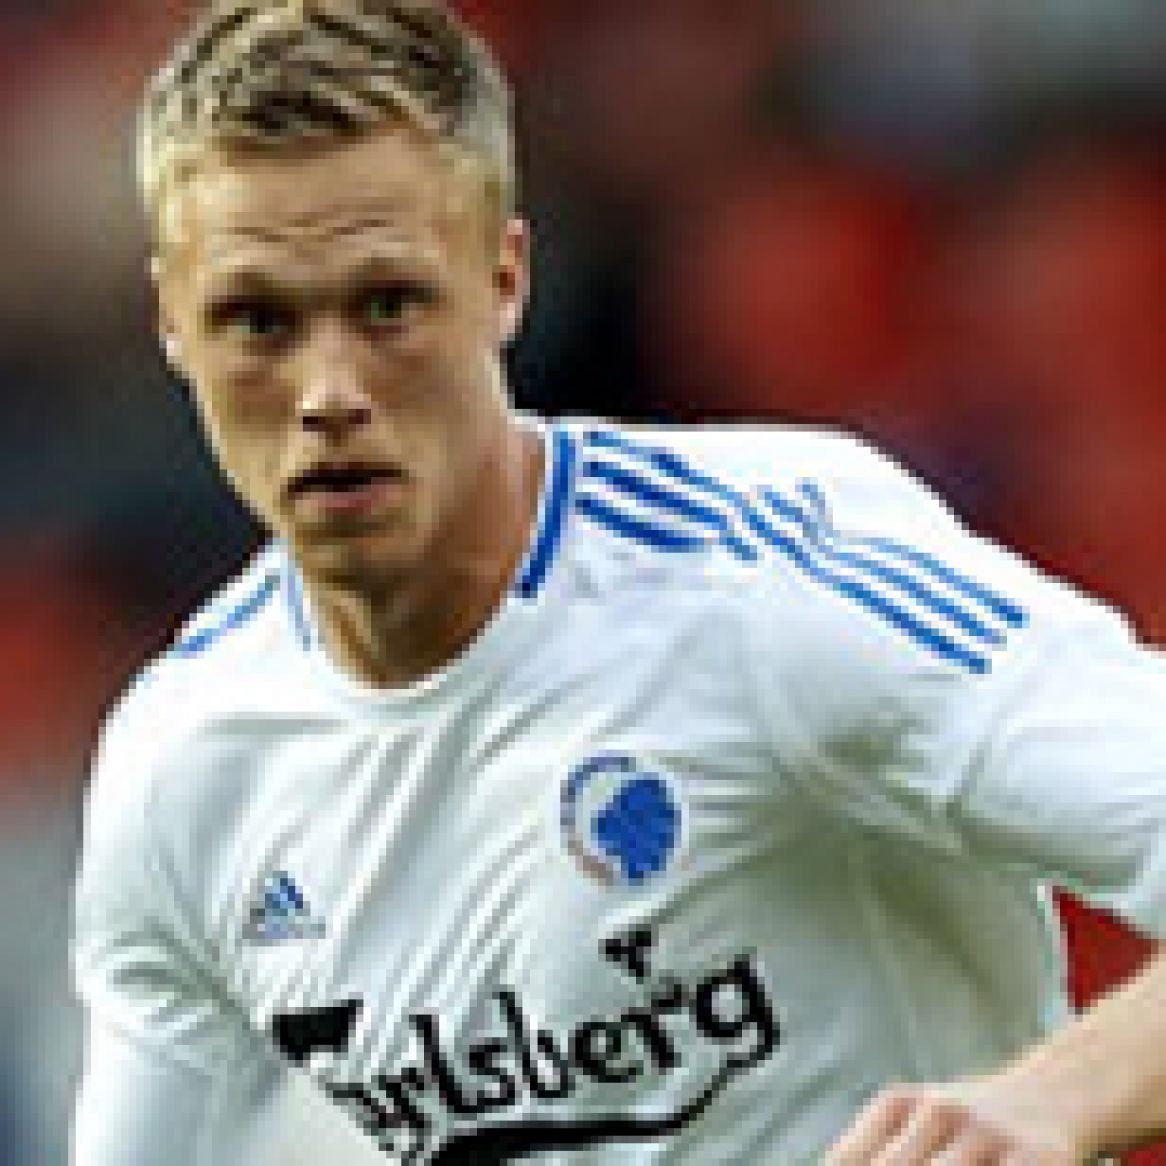 Jørgensen makes move permanent